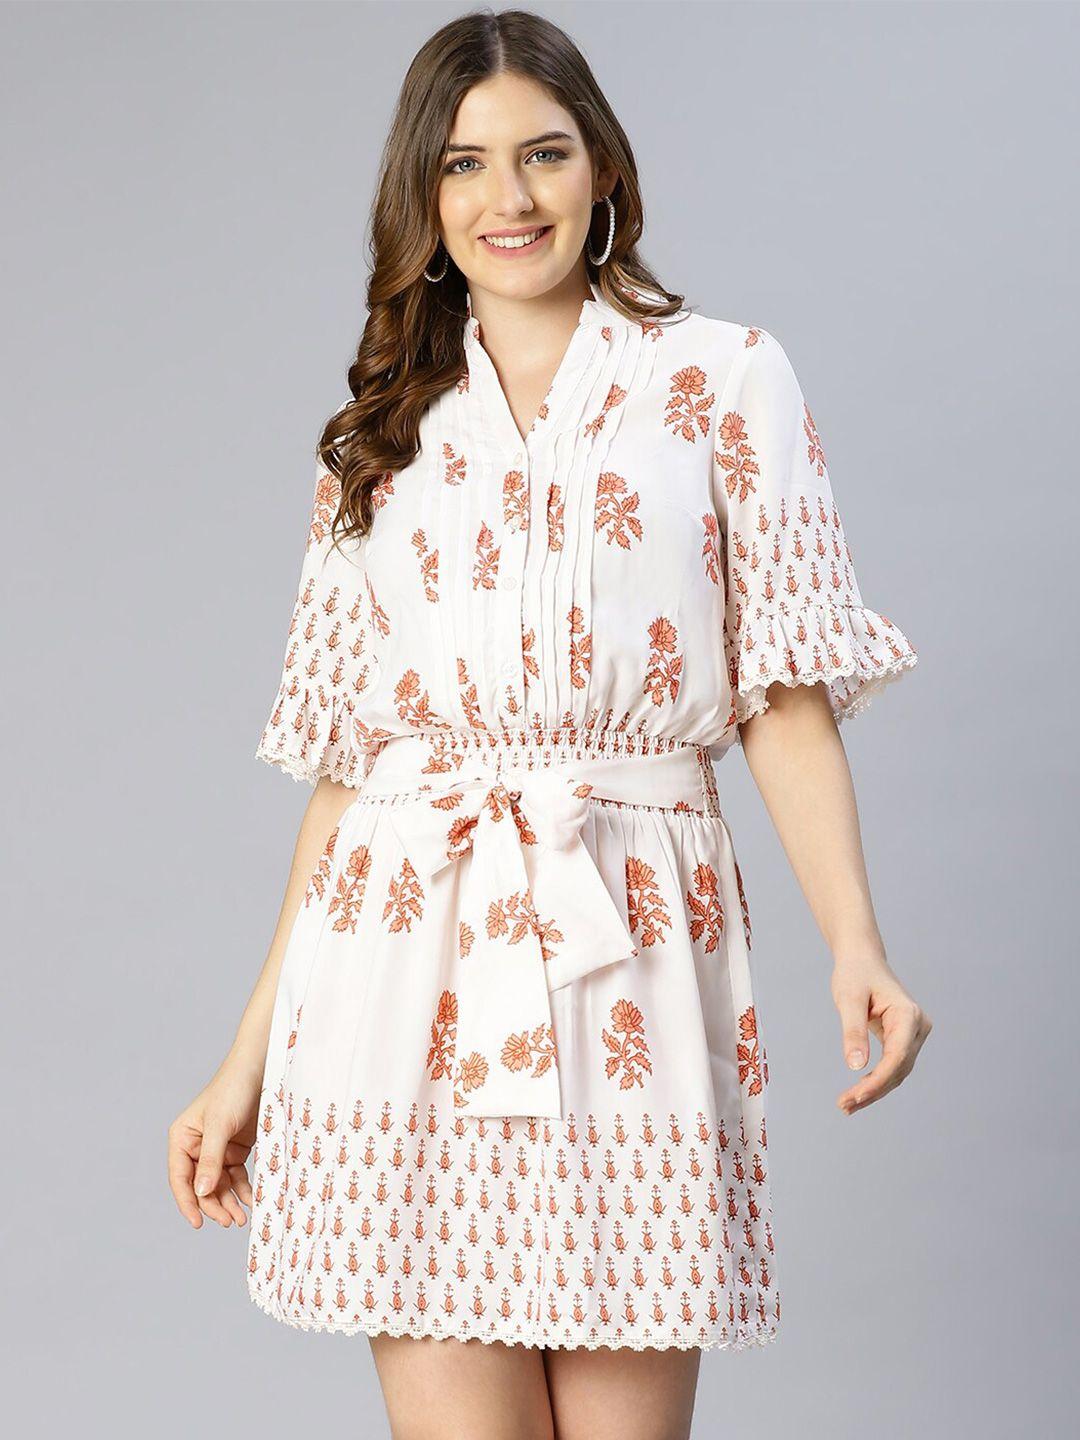 oxolloxo white & orange floral printed smocked shirt dress